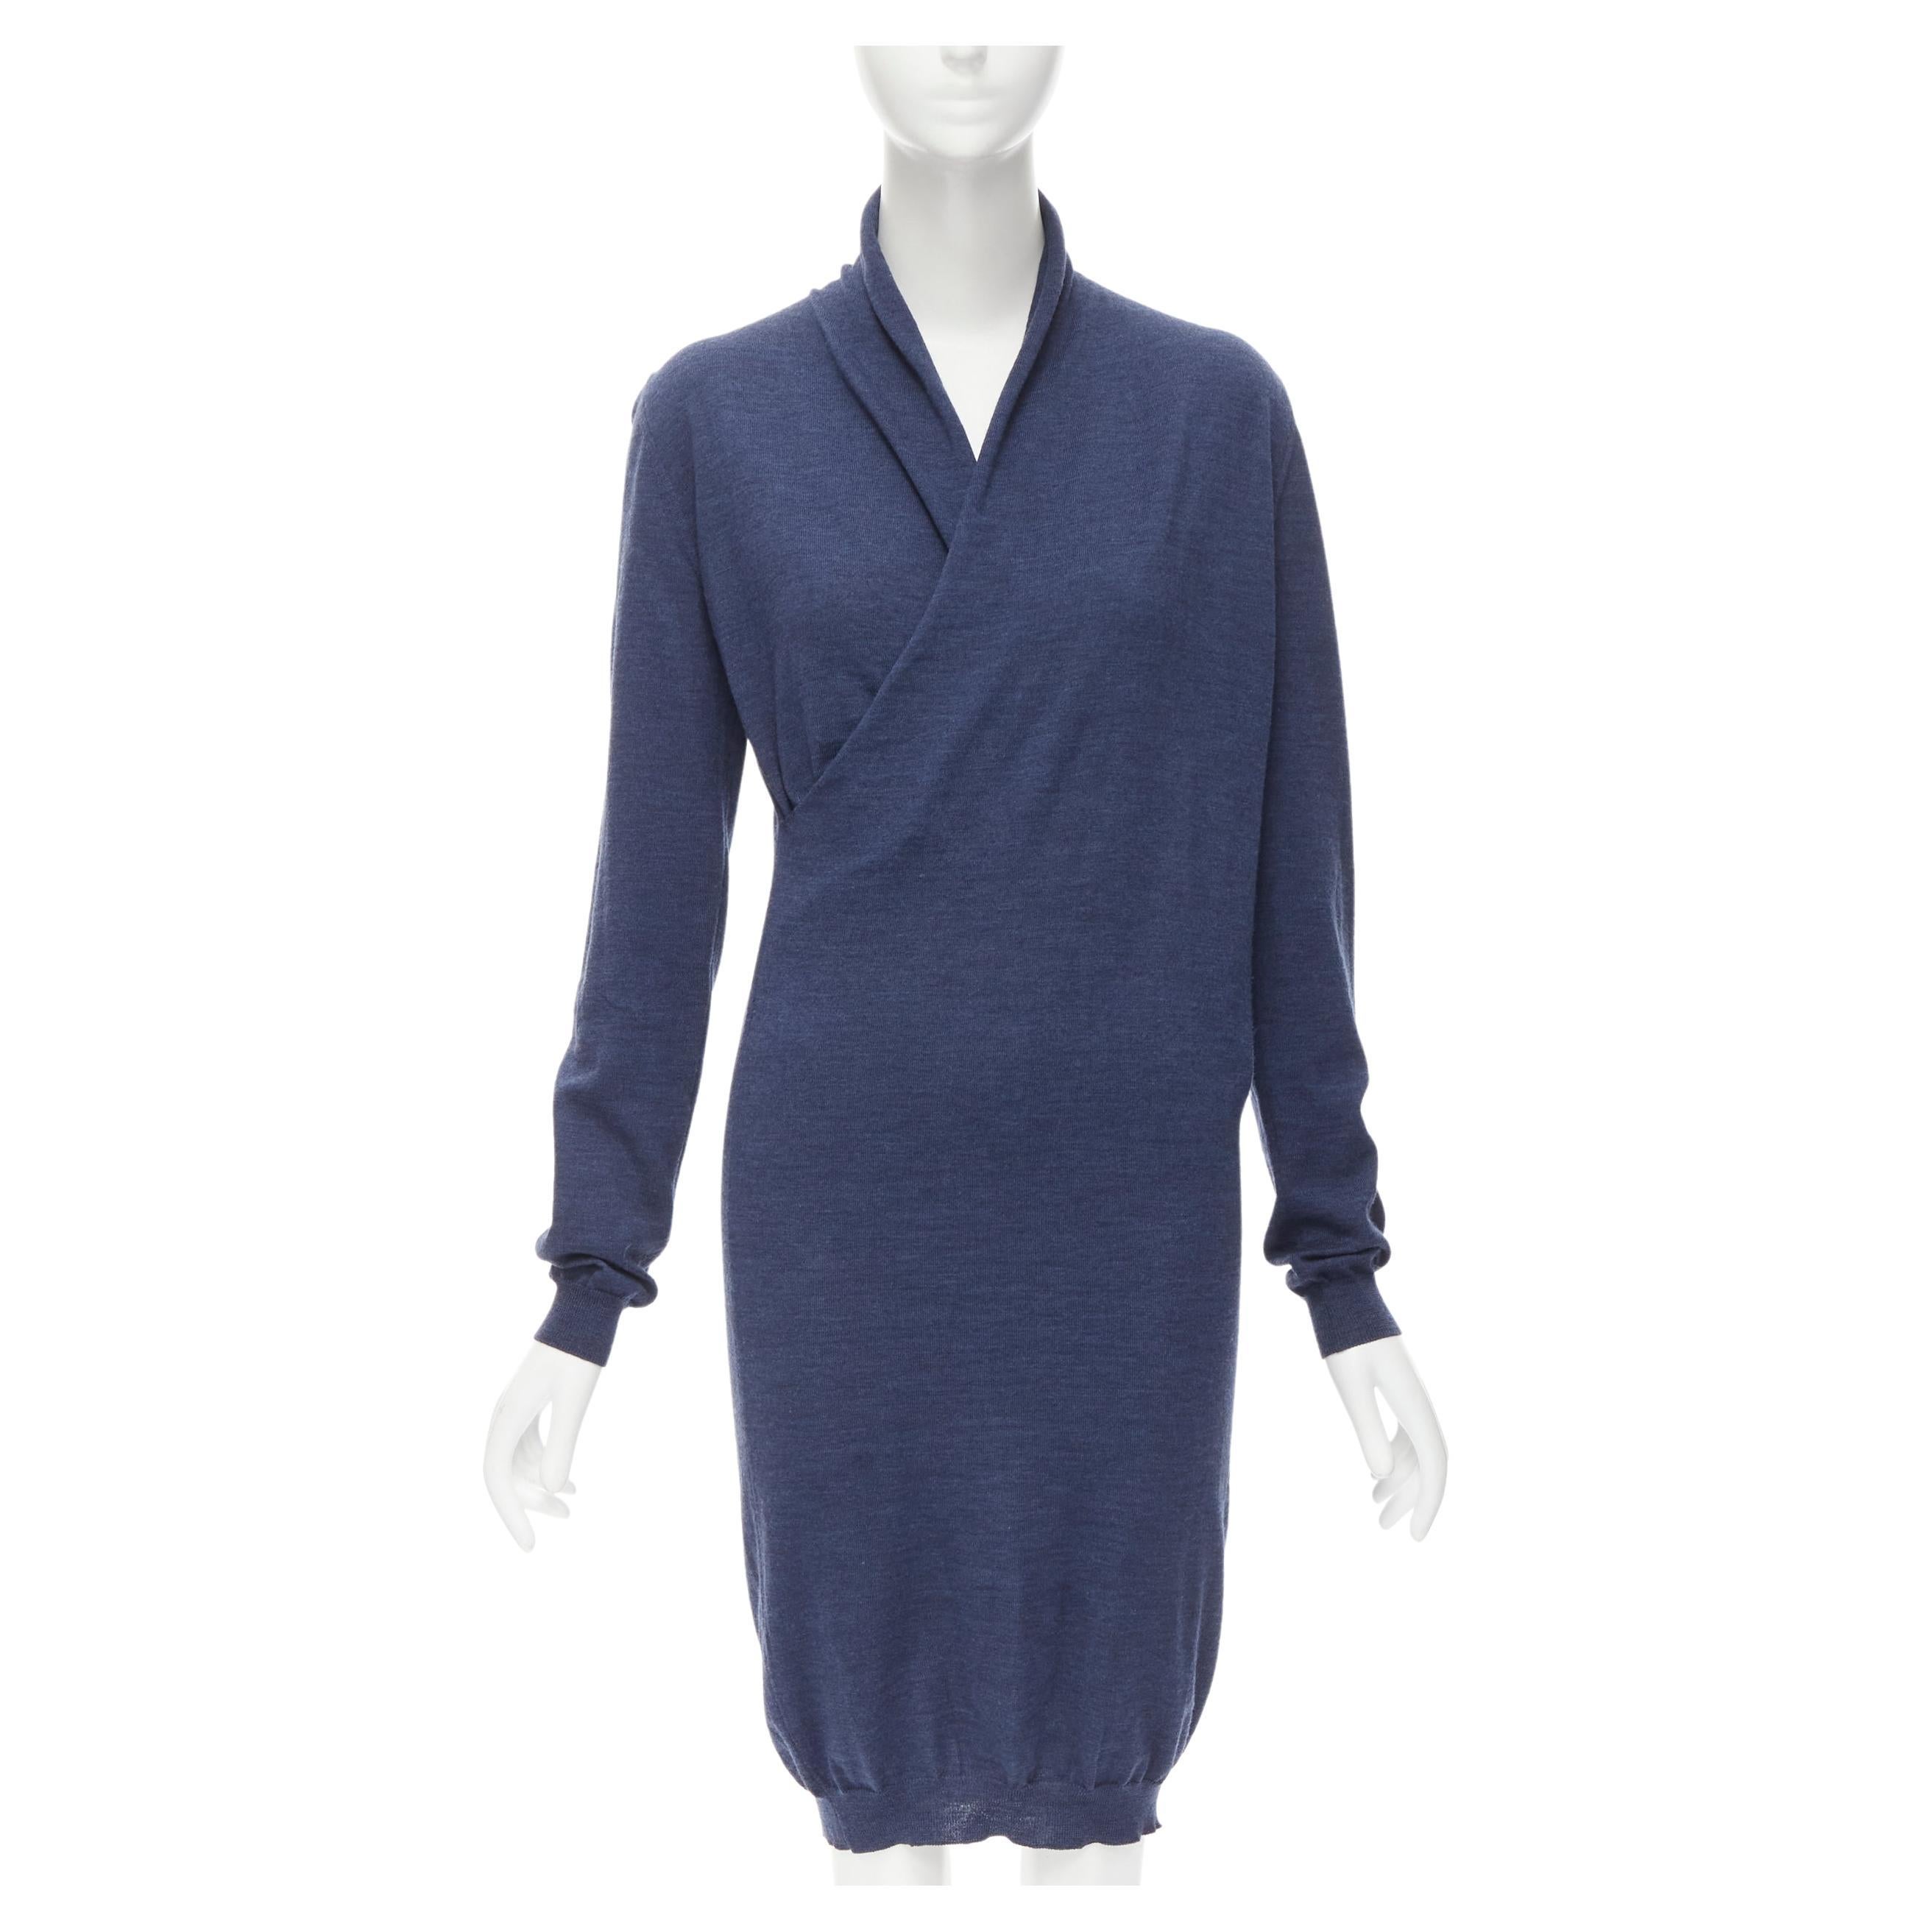 LANVIN Alber Elbaz Les 10 Ans 100% wool wrap neckline knitted dress S